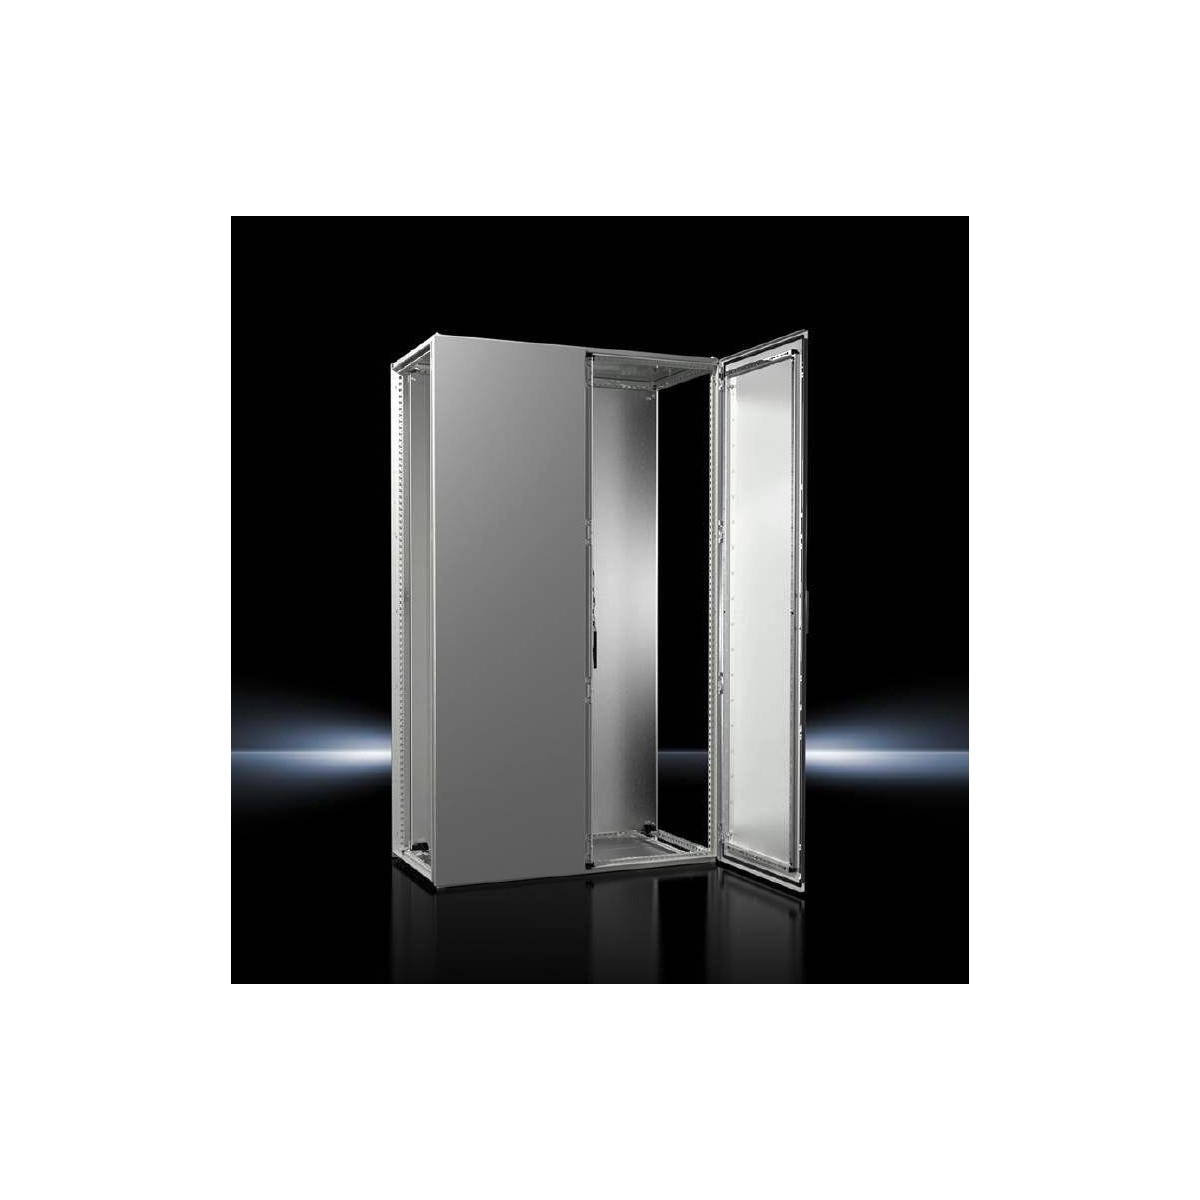 Rittal 8206.000 - Rack cabinet - Gray - Steel - IP55 - NEMA 12 - IK10 - 1200 mm